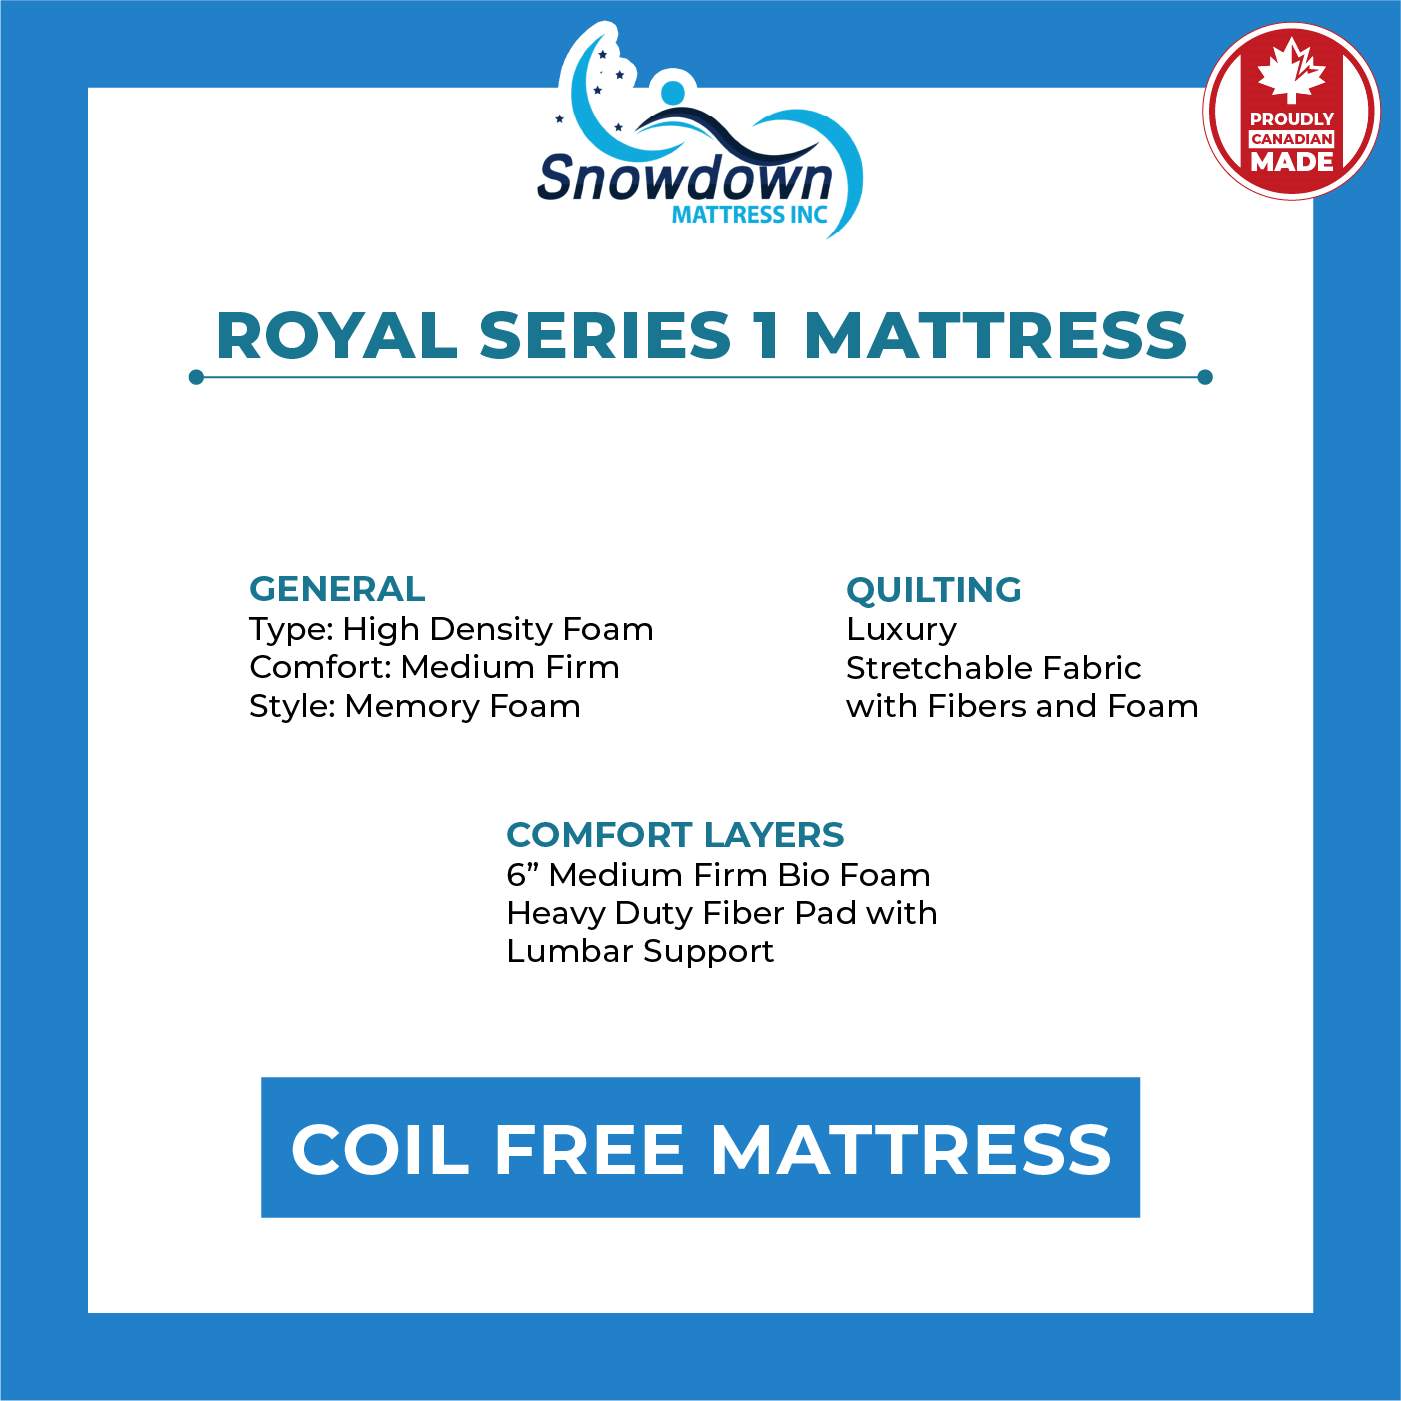 Royal Series 1 Mattress